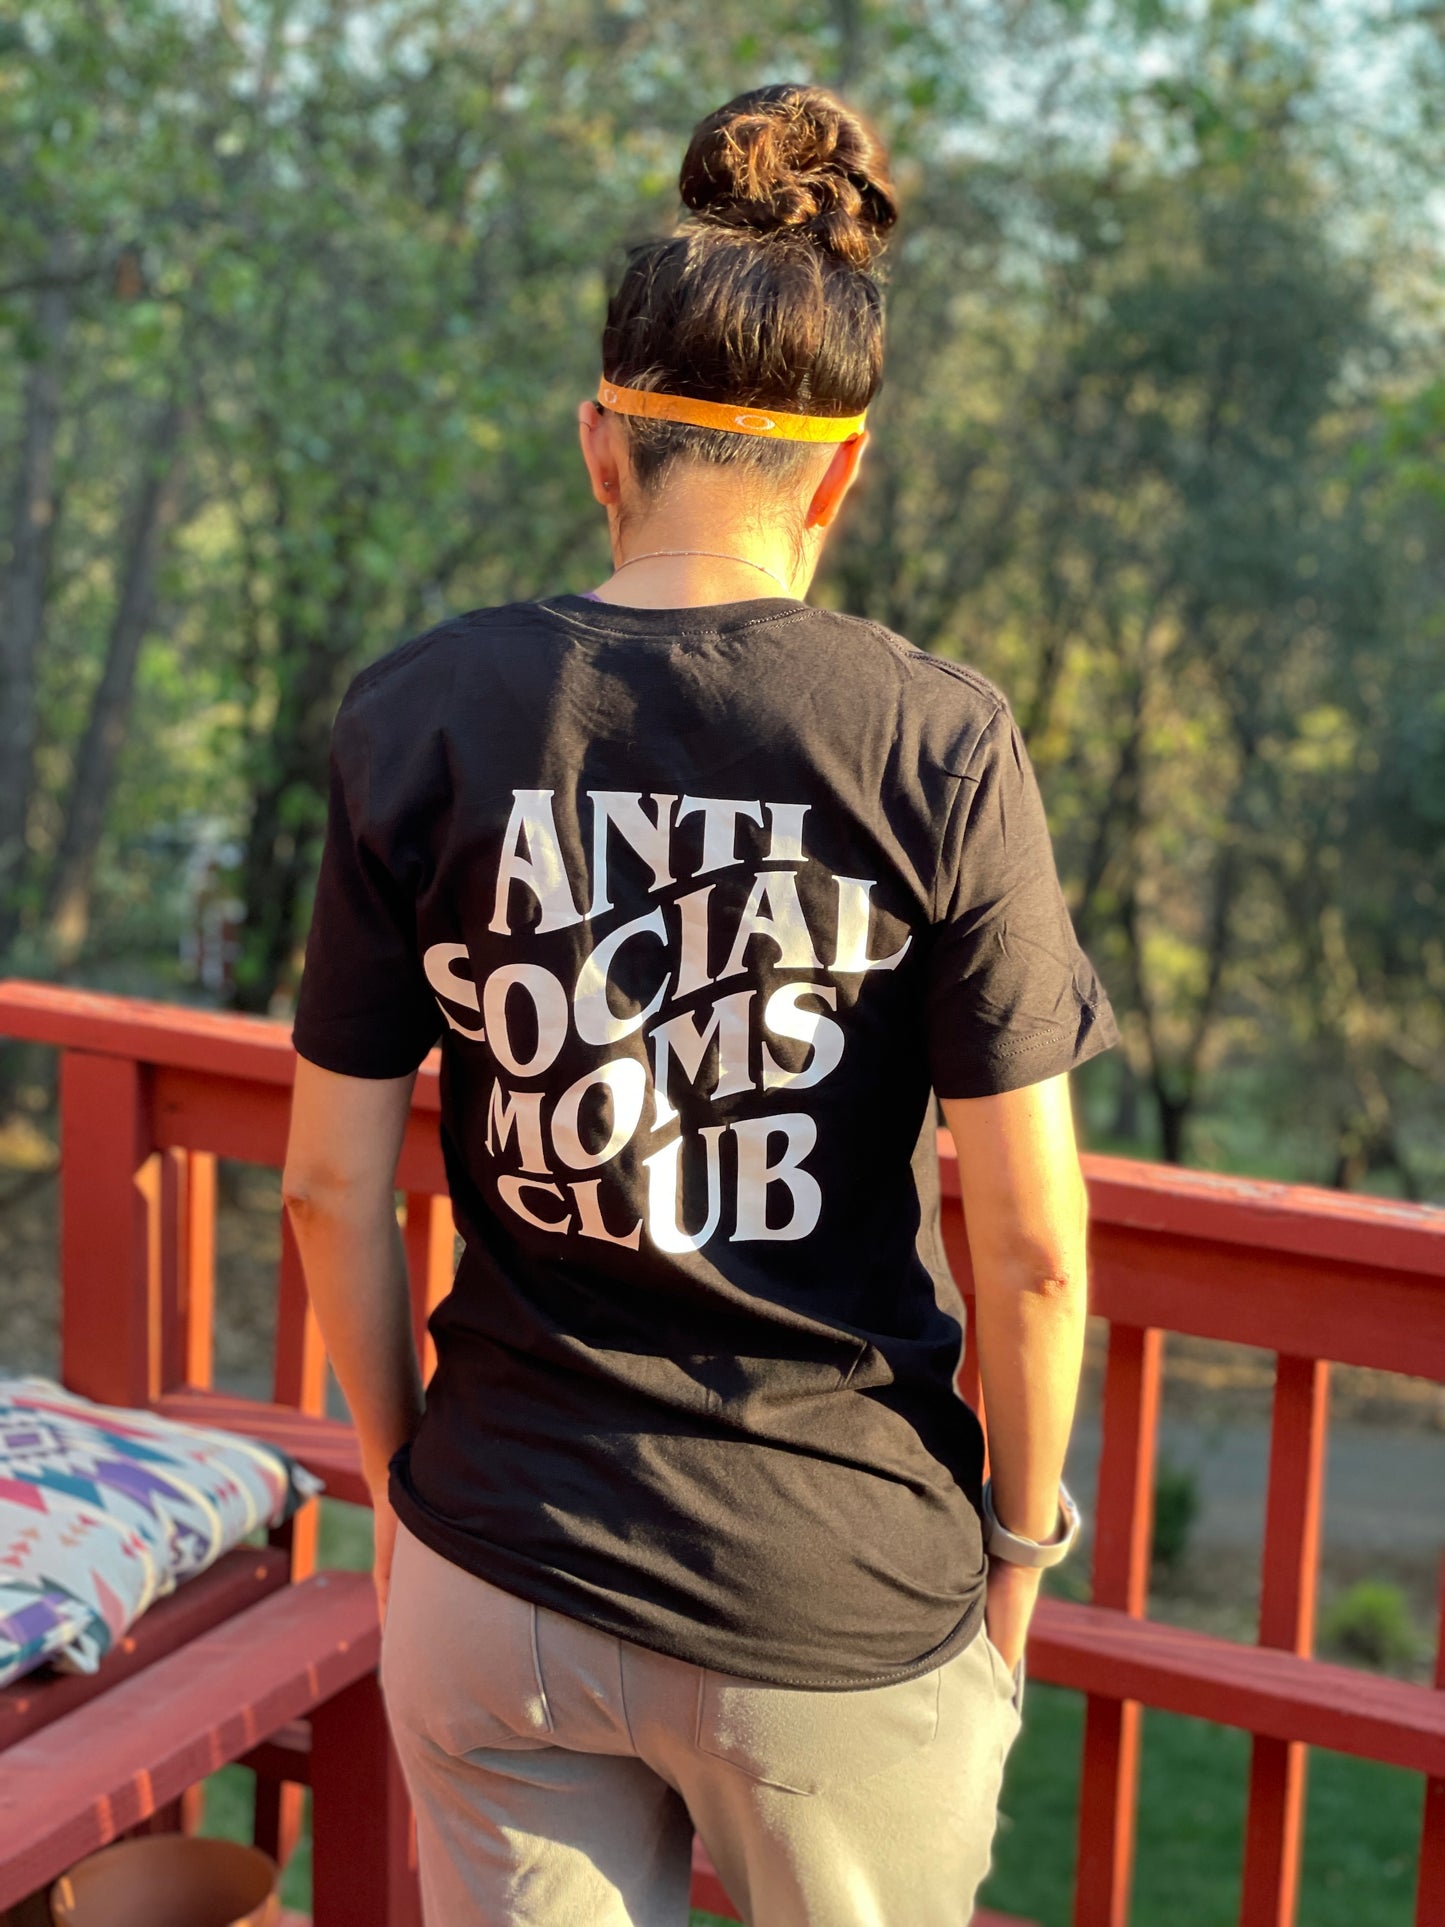 Anti Social Moms Club | Butterfly | Shh | Don't talk to me